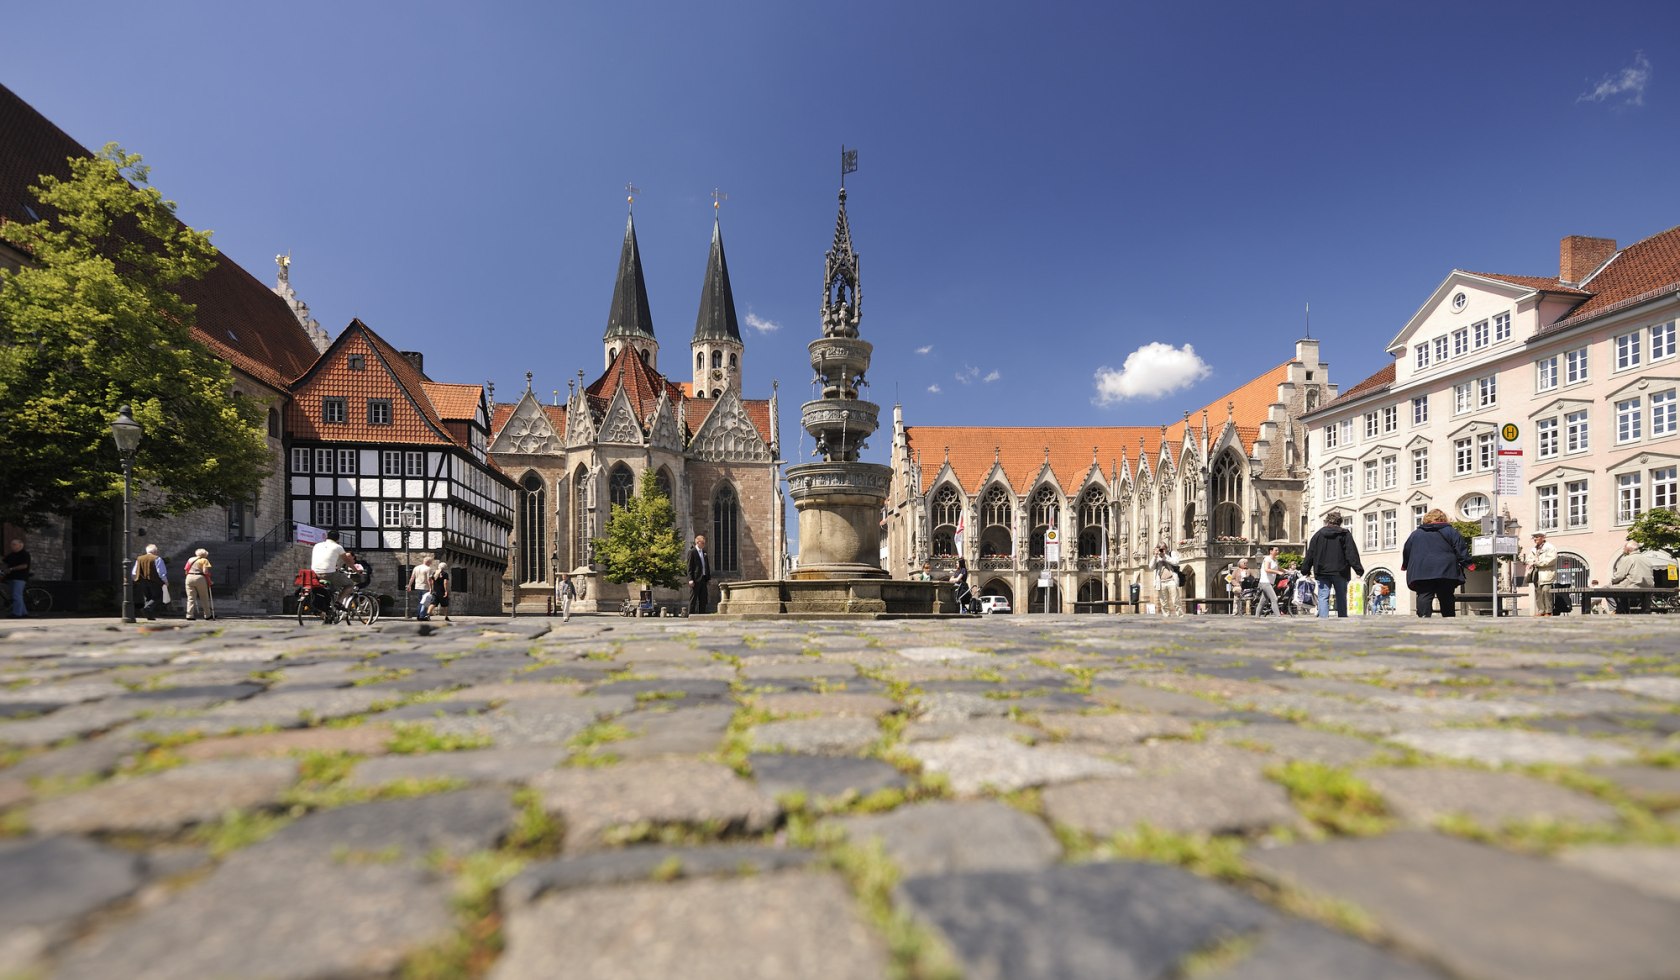 The old town market with its fountain, © Braunschweig Stadtmarketing GmbH / Daniel Möller